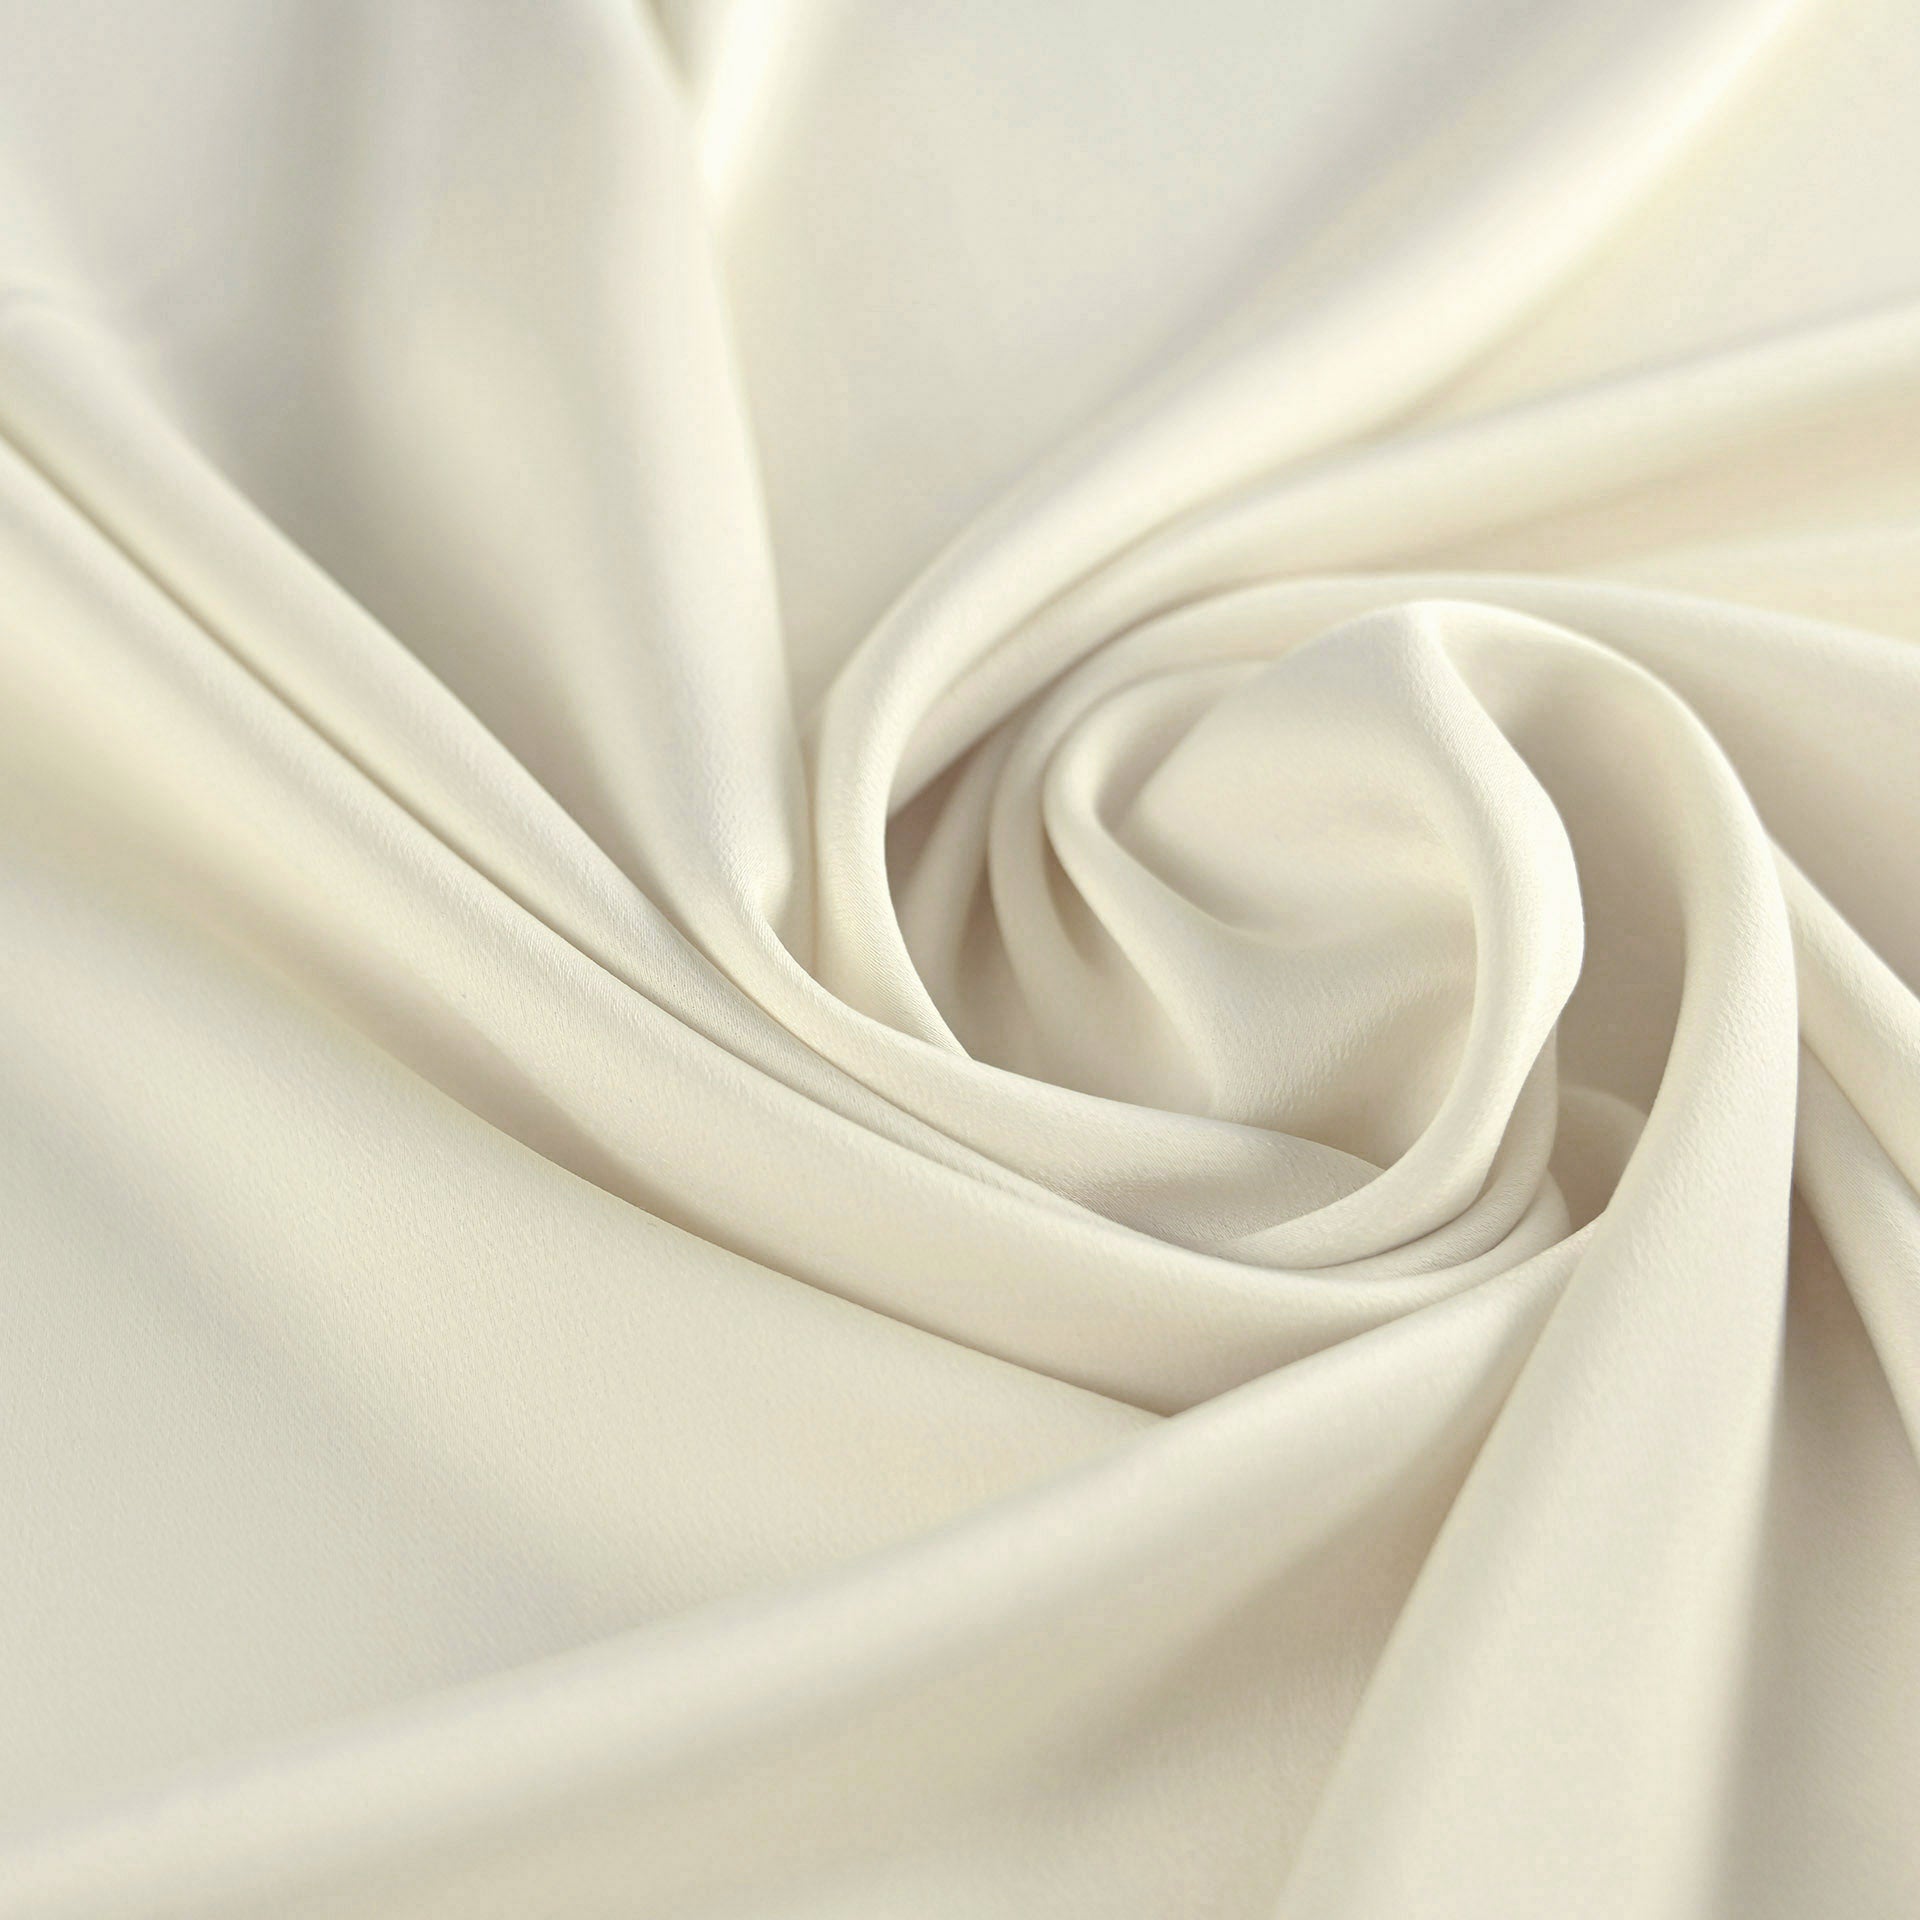 Ivory Satin fabric 4468